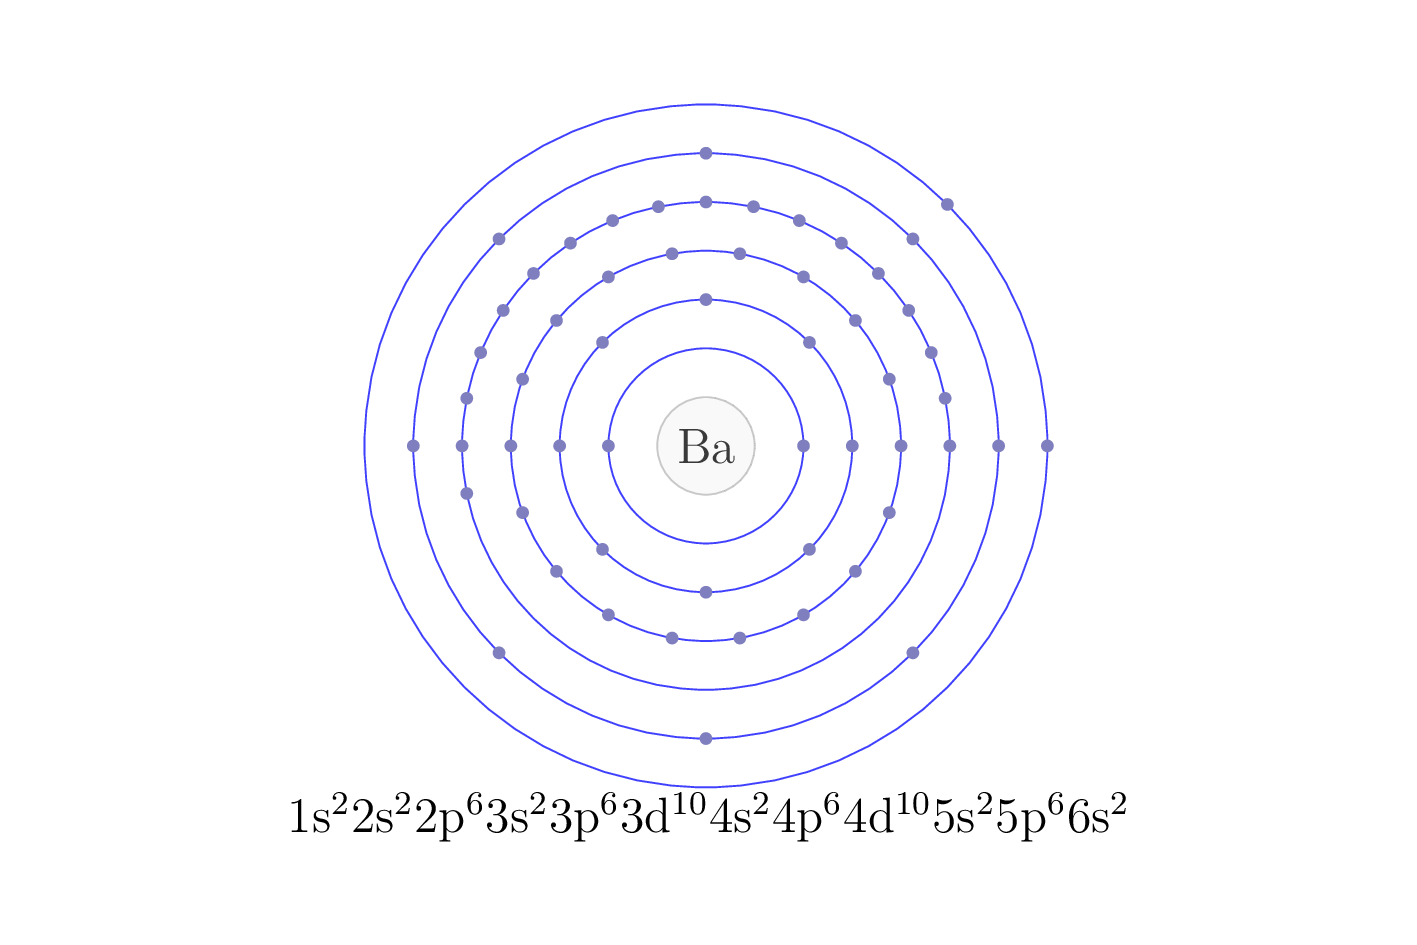 electron configuration of element Ba